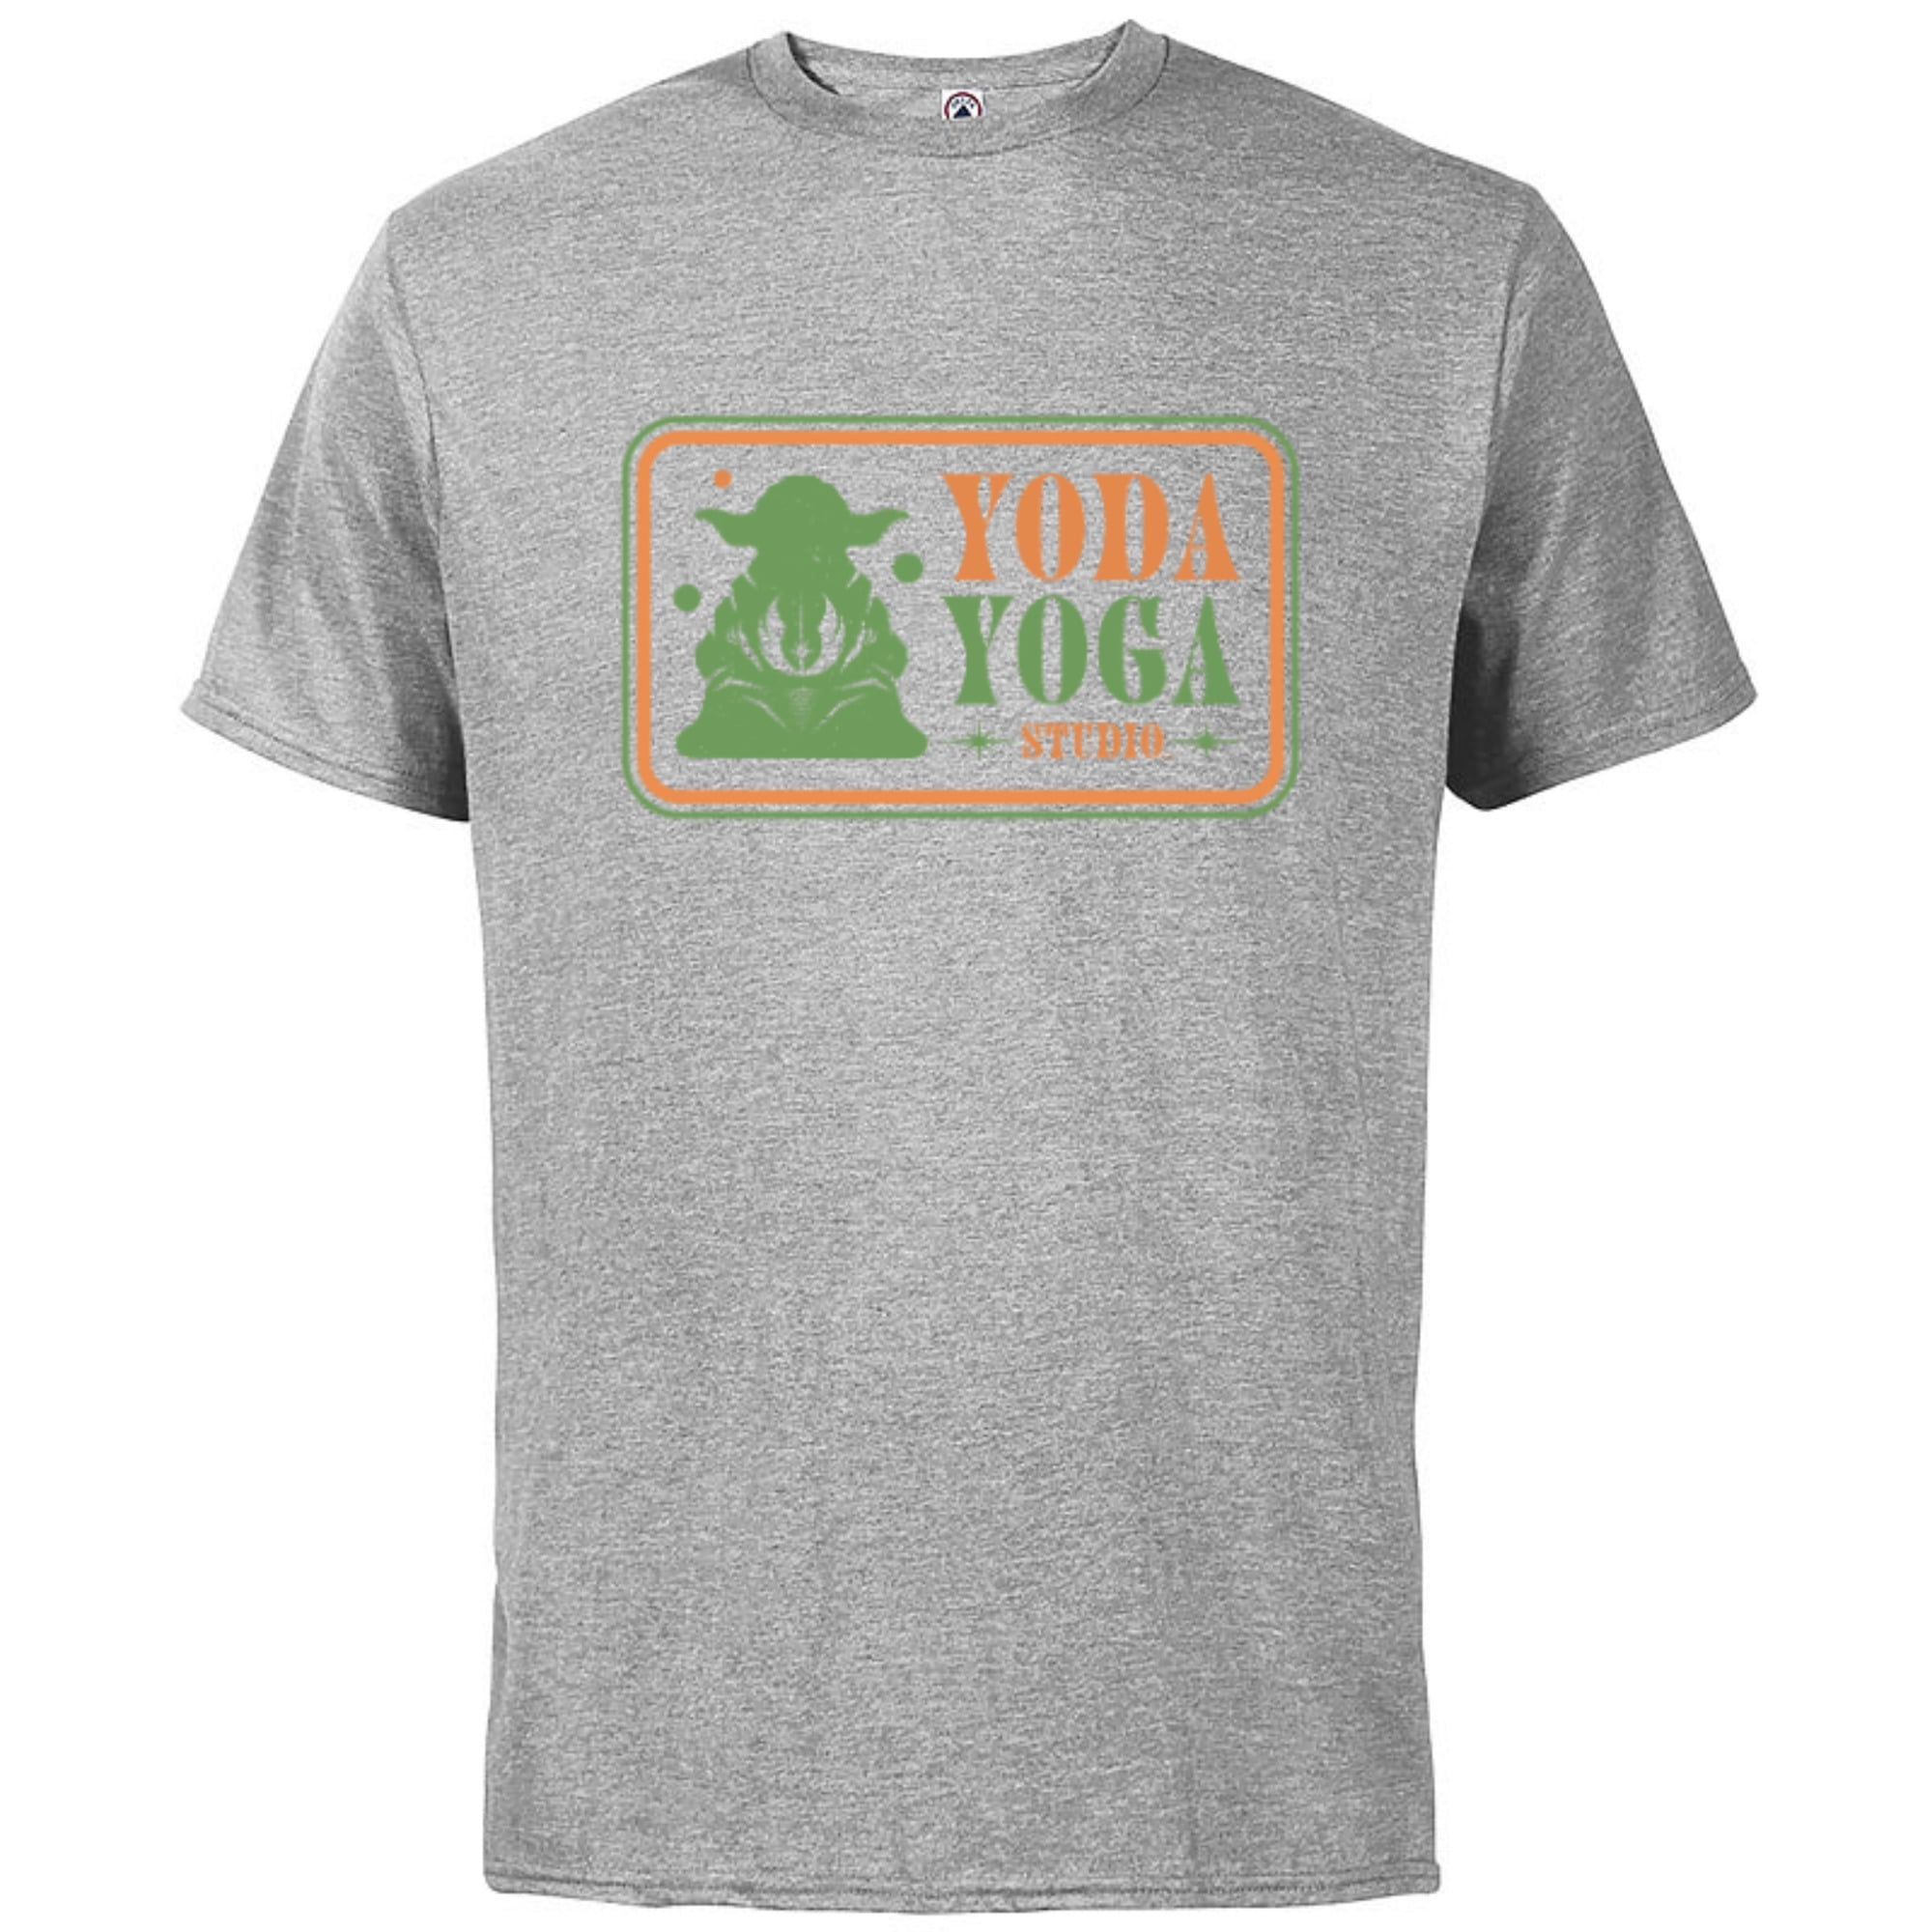 Squats Low Standards High - Yoga Shirts - Yoga T-Shirt Yoga Tops - Funny Workout  Shirt - Women's Yoga Tank Top T Shirt